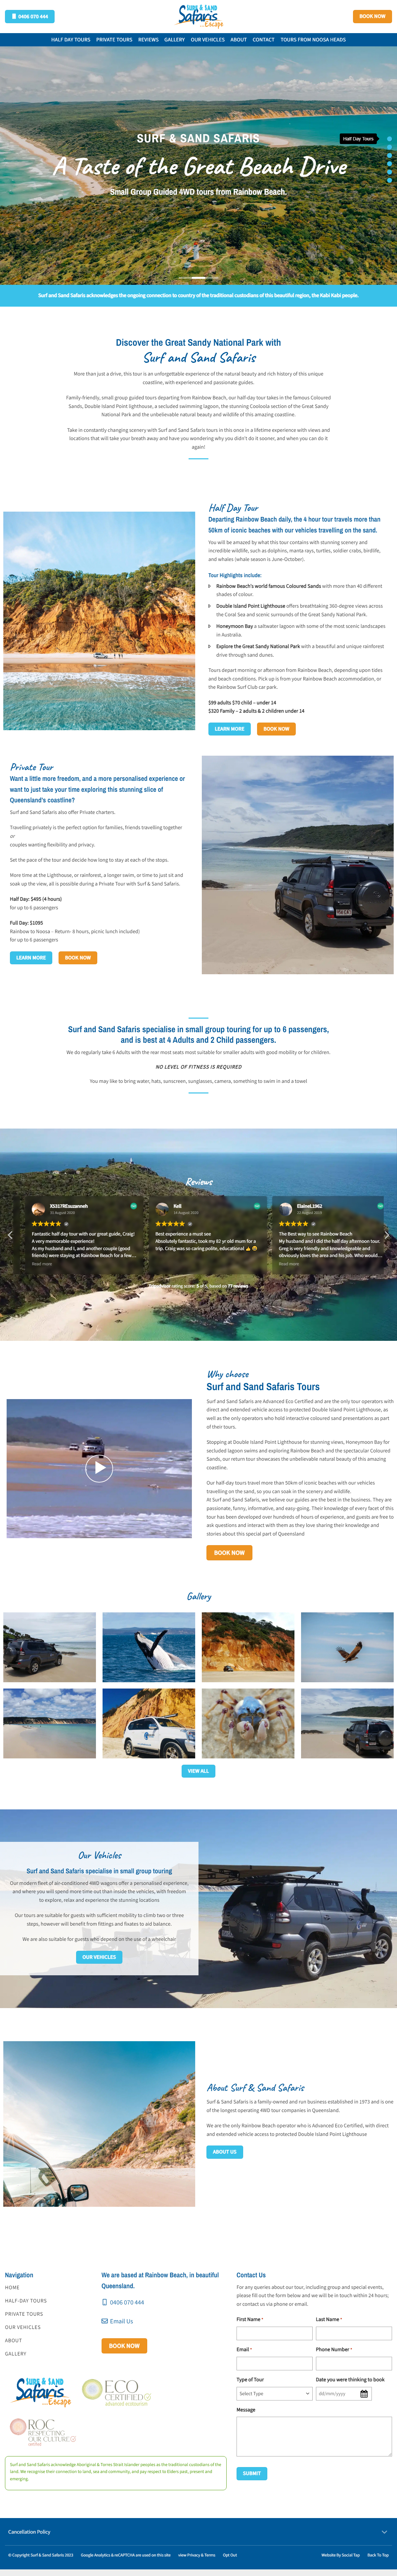 Hospitality Tourism Website Design Surf And Sand Safaris